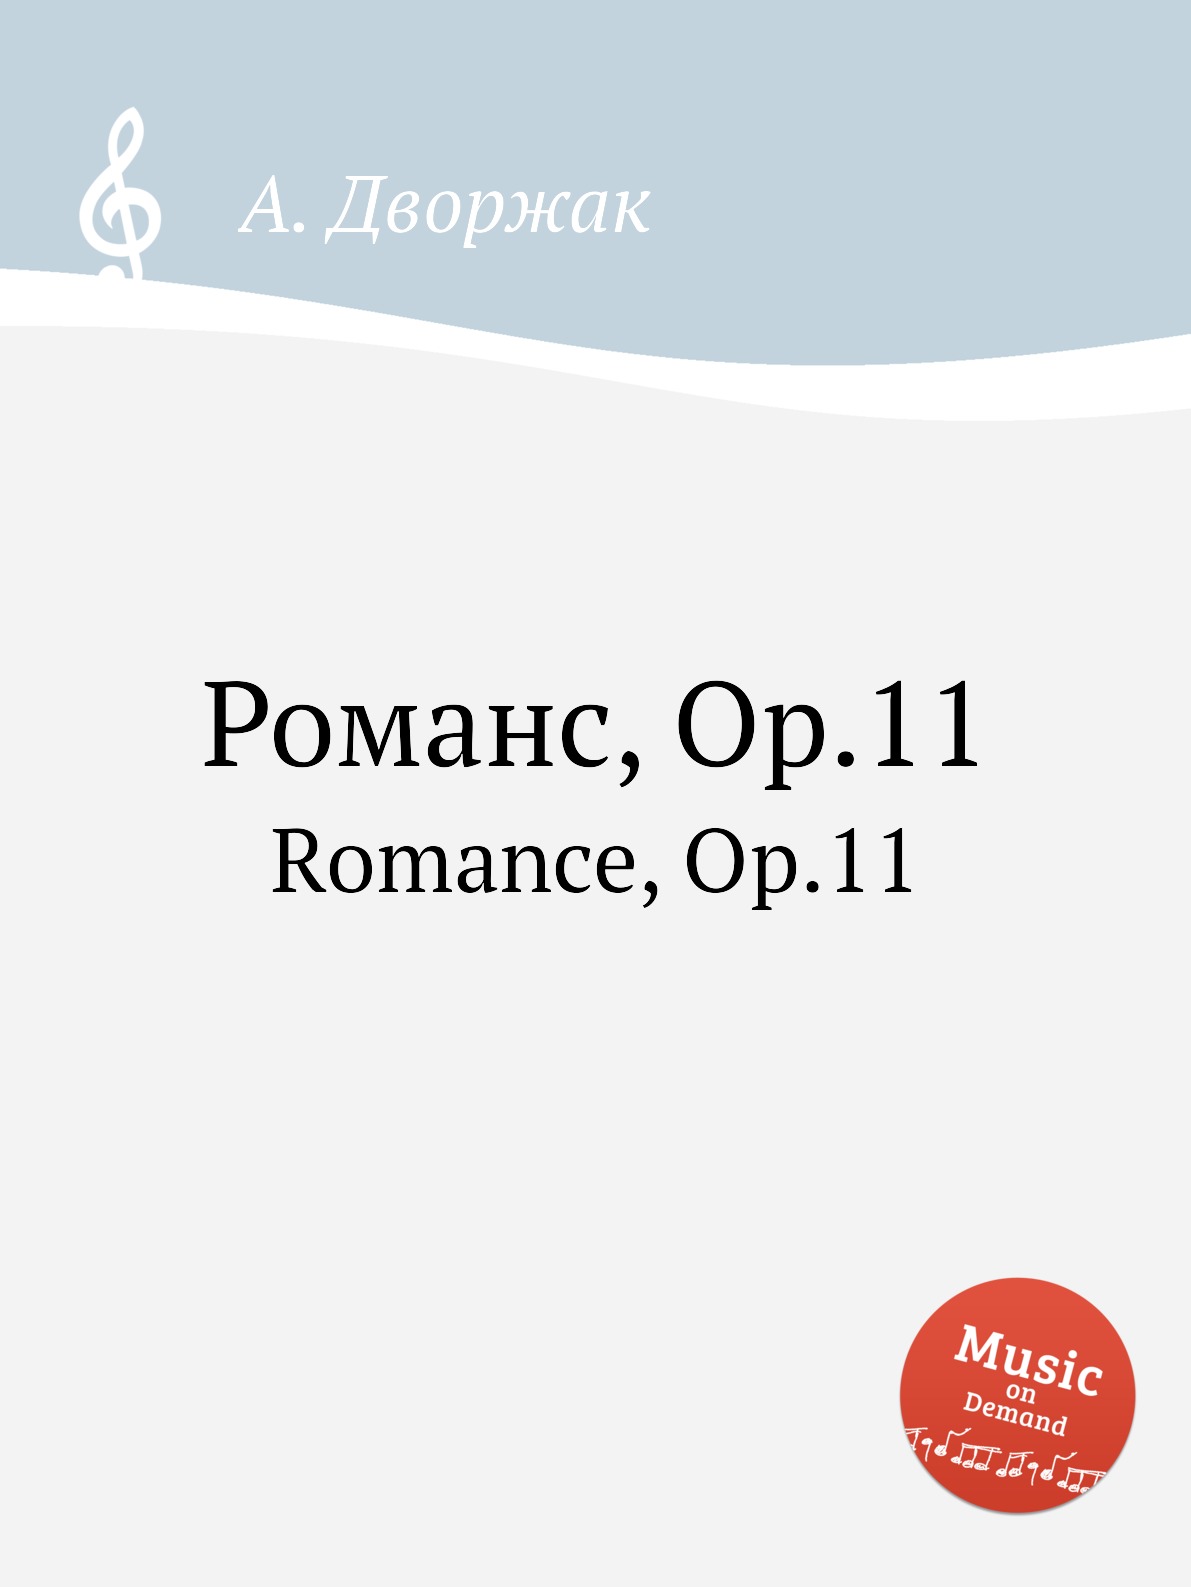 А. Дворжак "романс, op.11". Romances 11